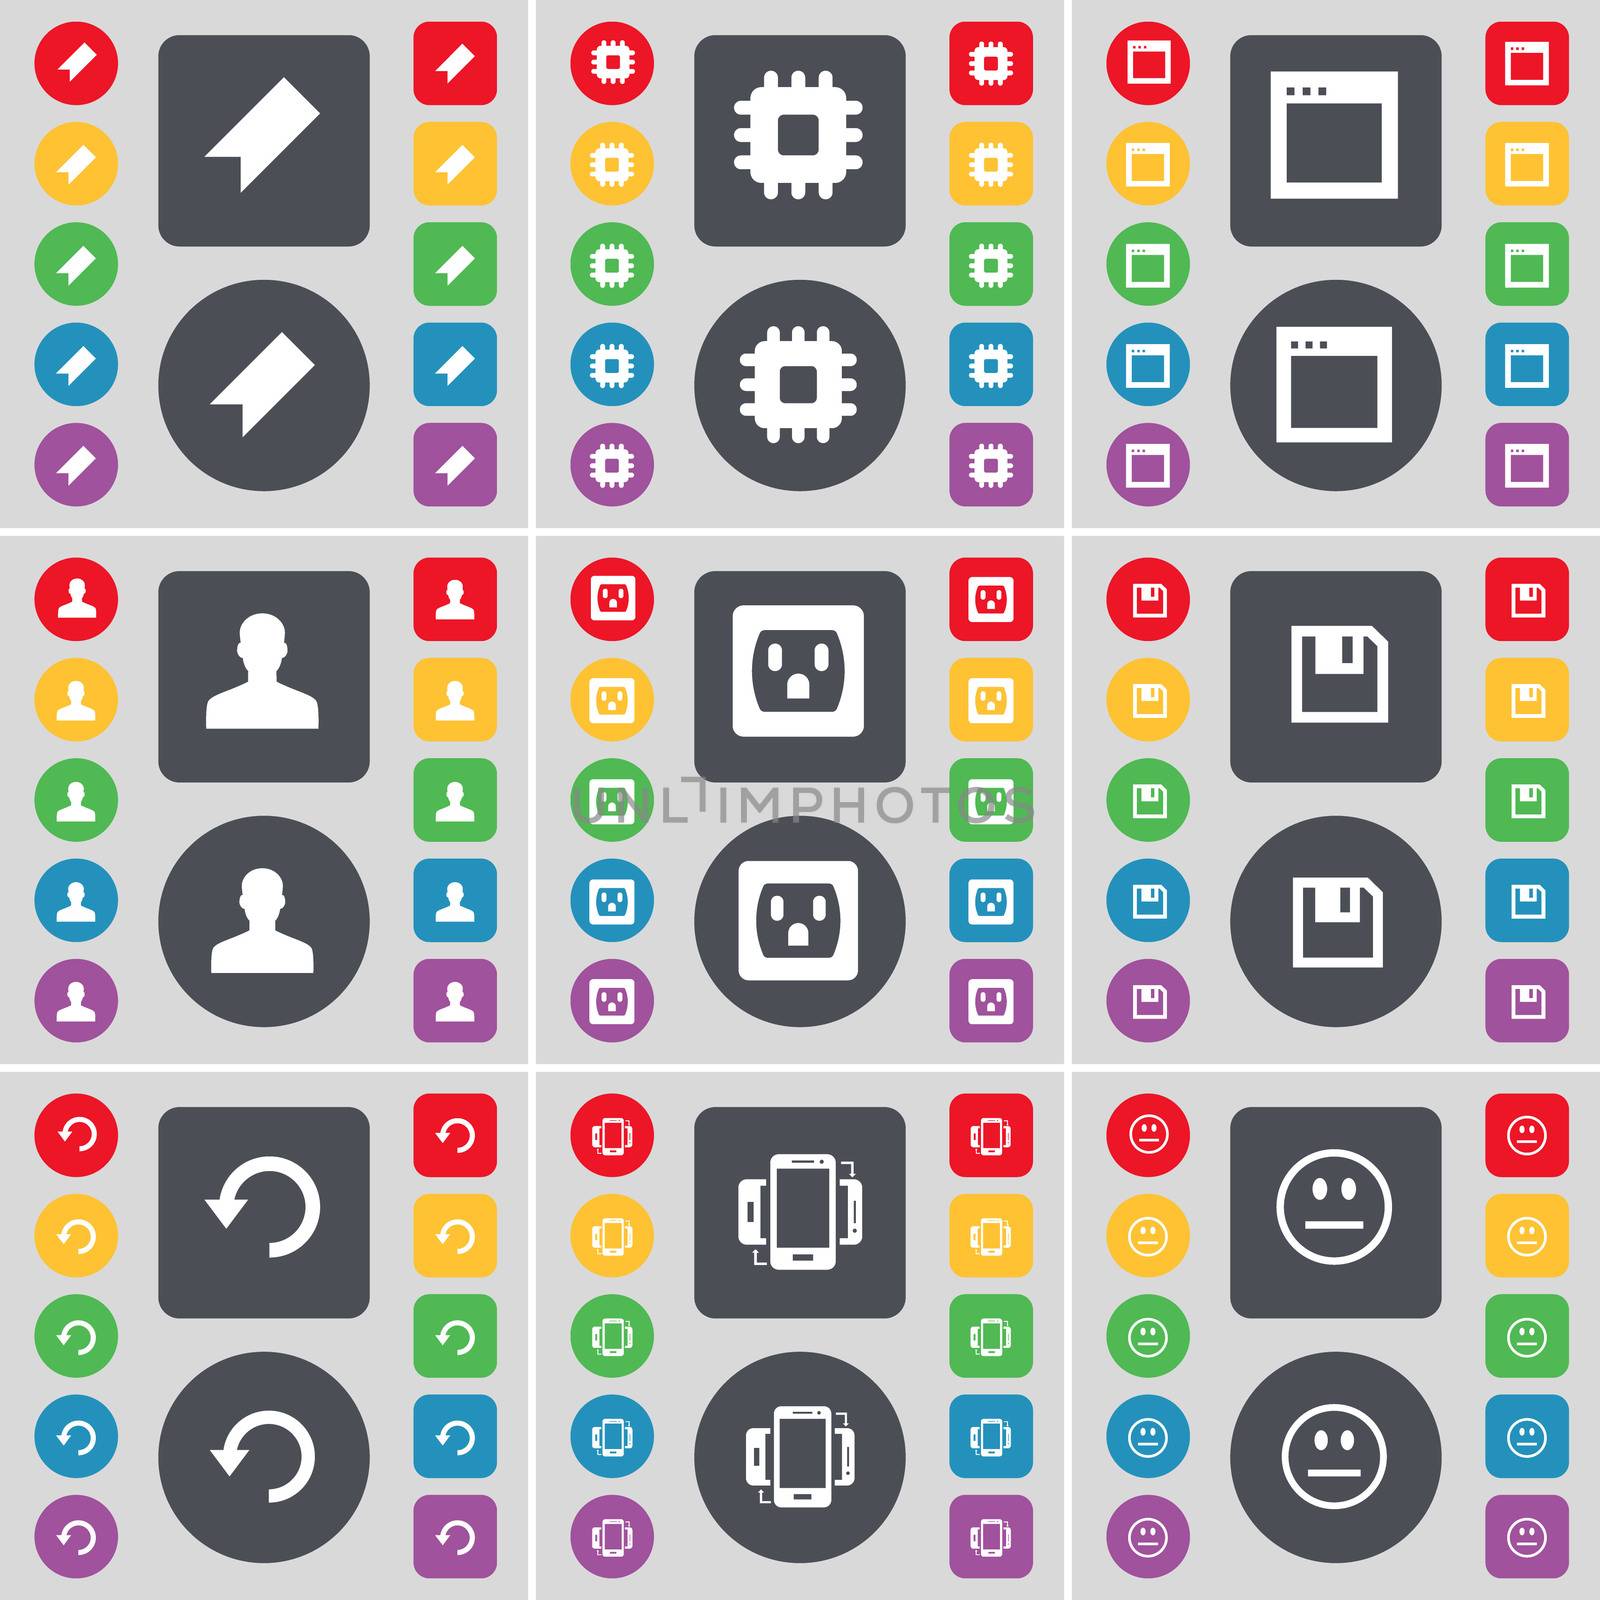 Marker, Processor, Window, Avatar, Socket, Floppy, Reload, Smartphone, Smile icon symbol. A large set of flat, colored buttons for your design. illustration